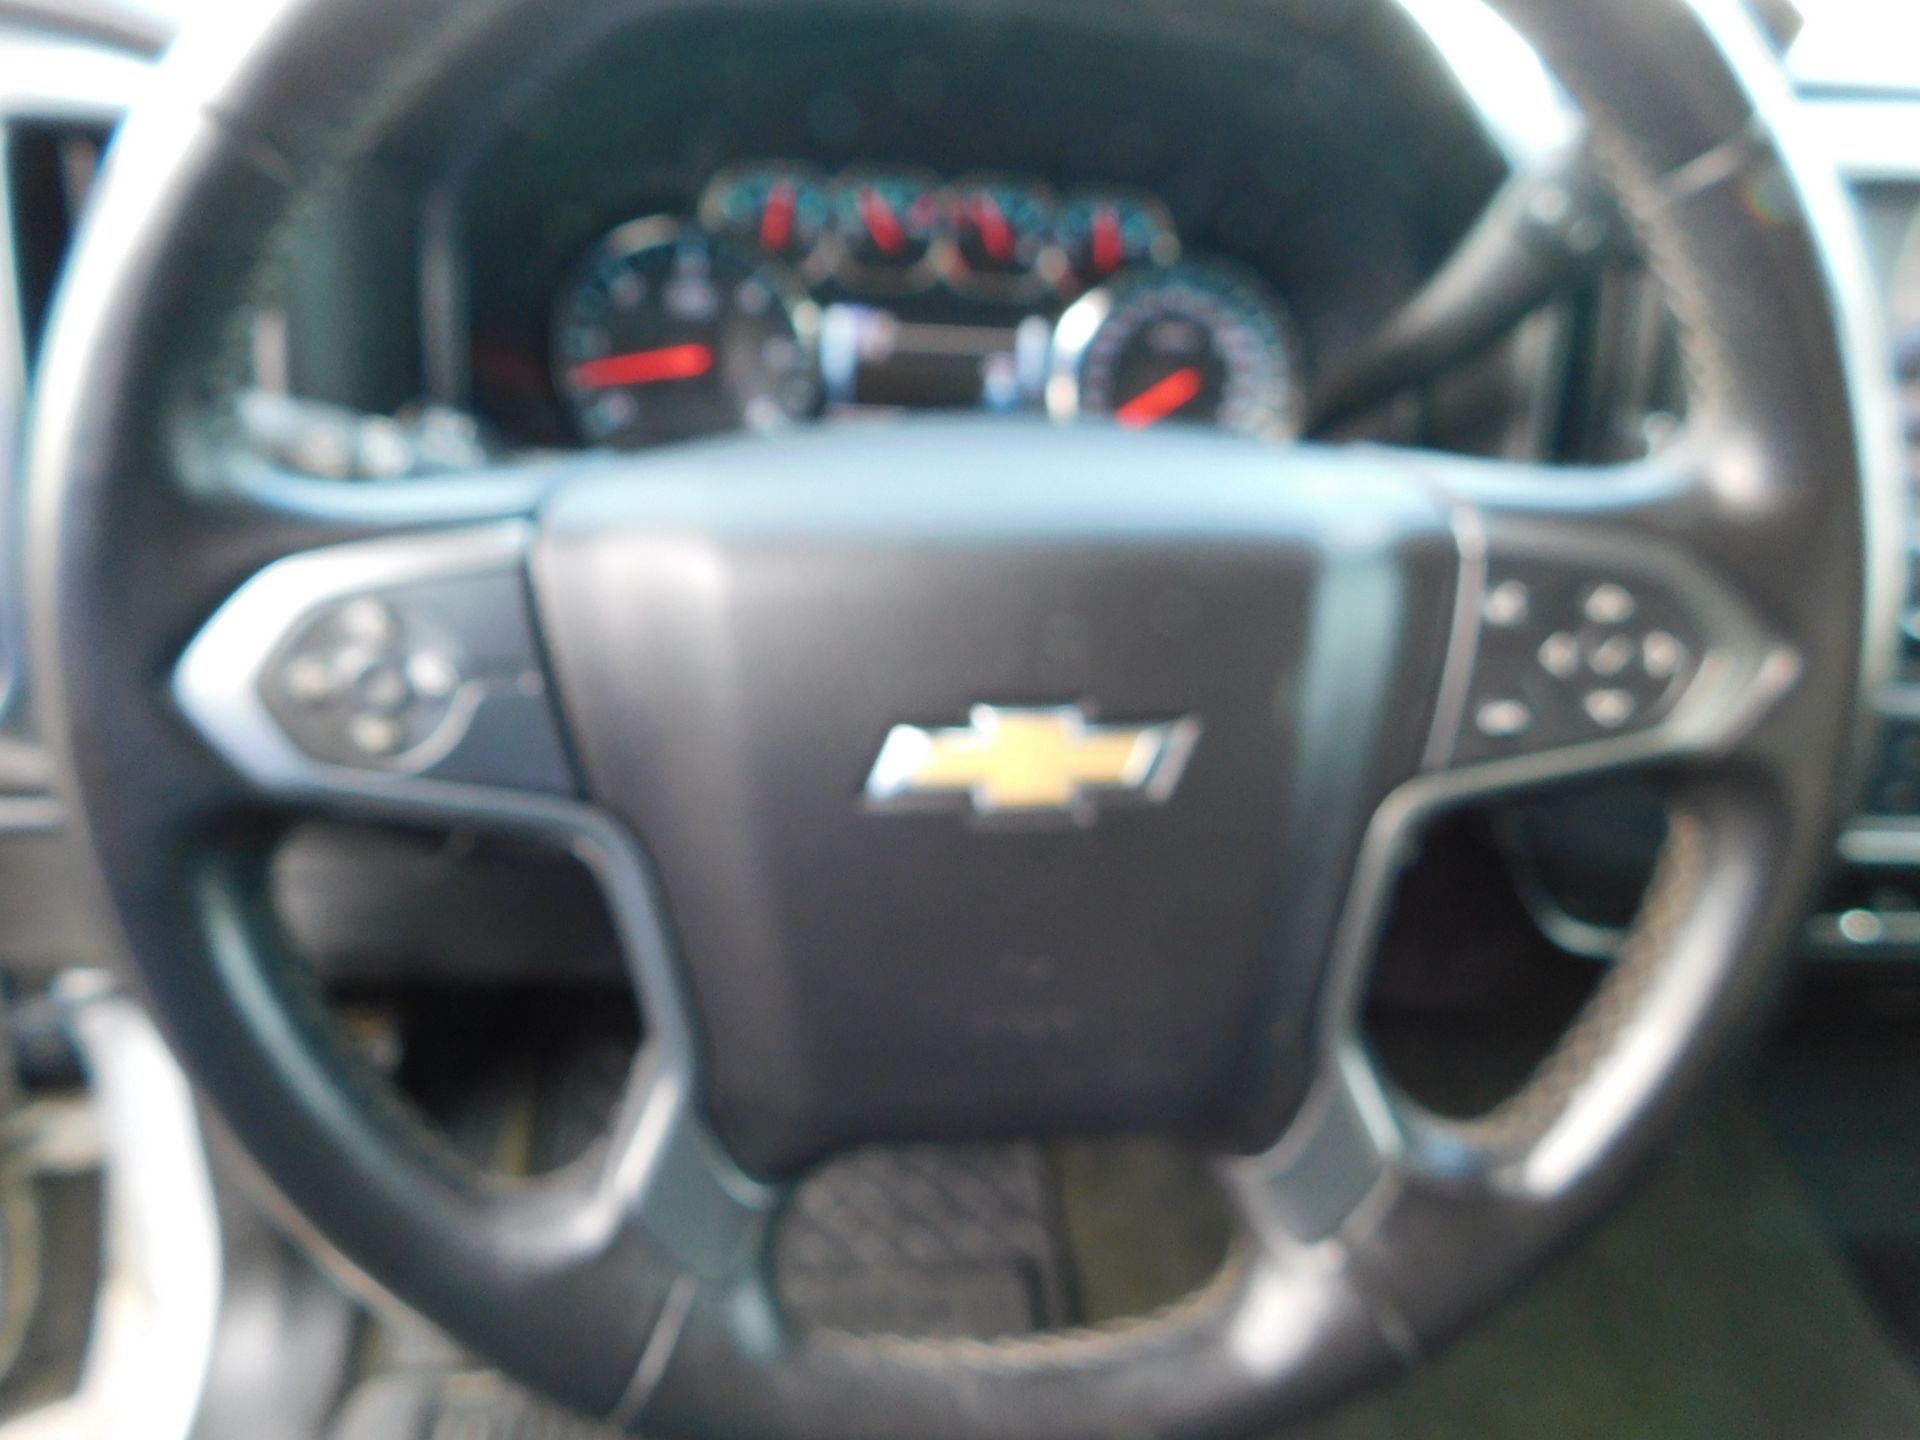 2014 Chevrolet Silverado LT Pickup, VIN 1GCVKREC3EZ139405, 4-Door 4 WD, Automatic, AM/FM, AC, Cruise - Image 29 of 51